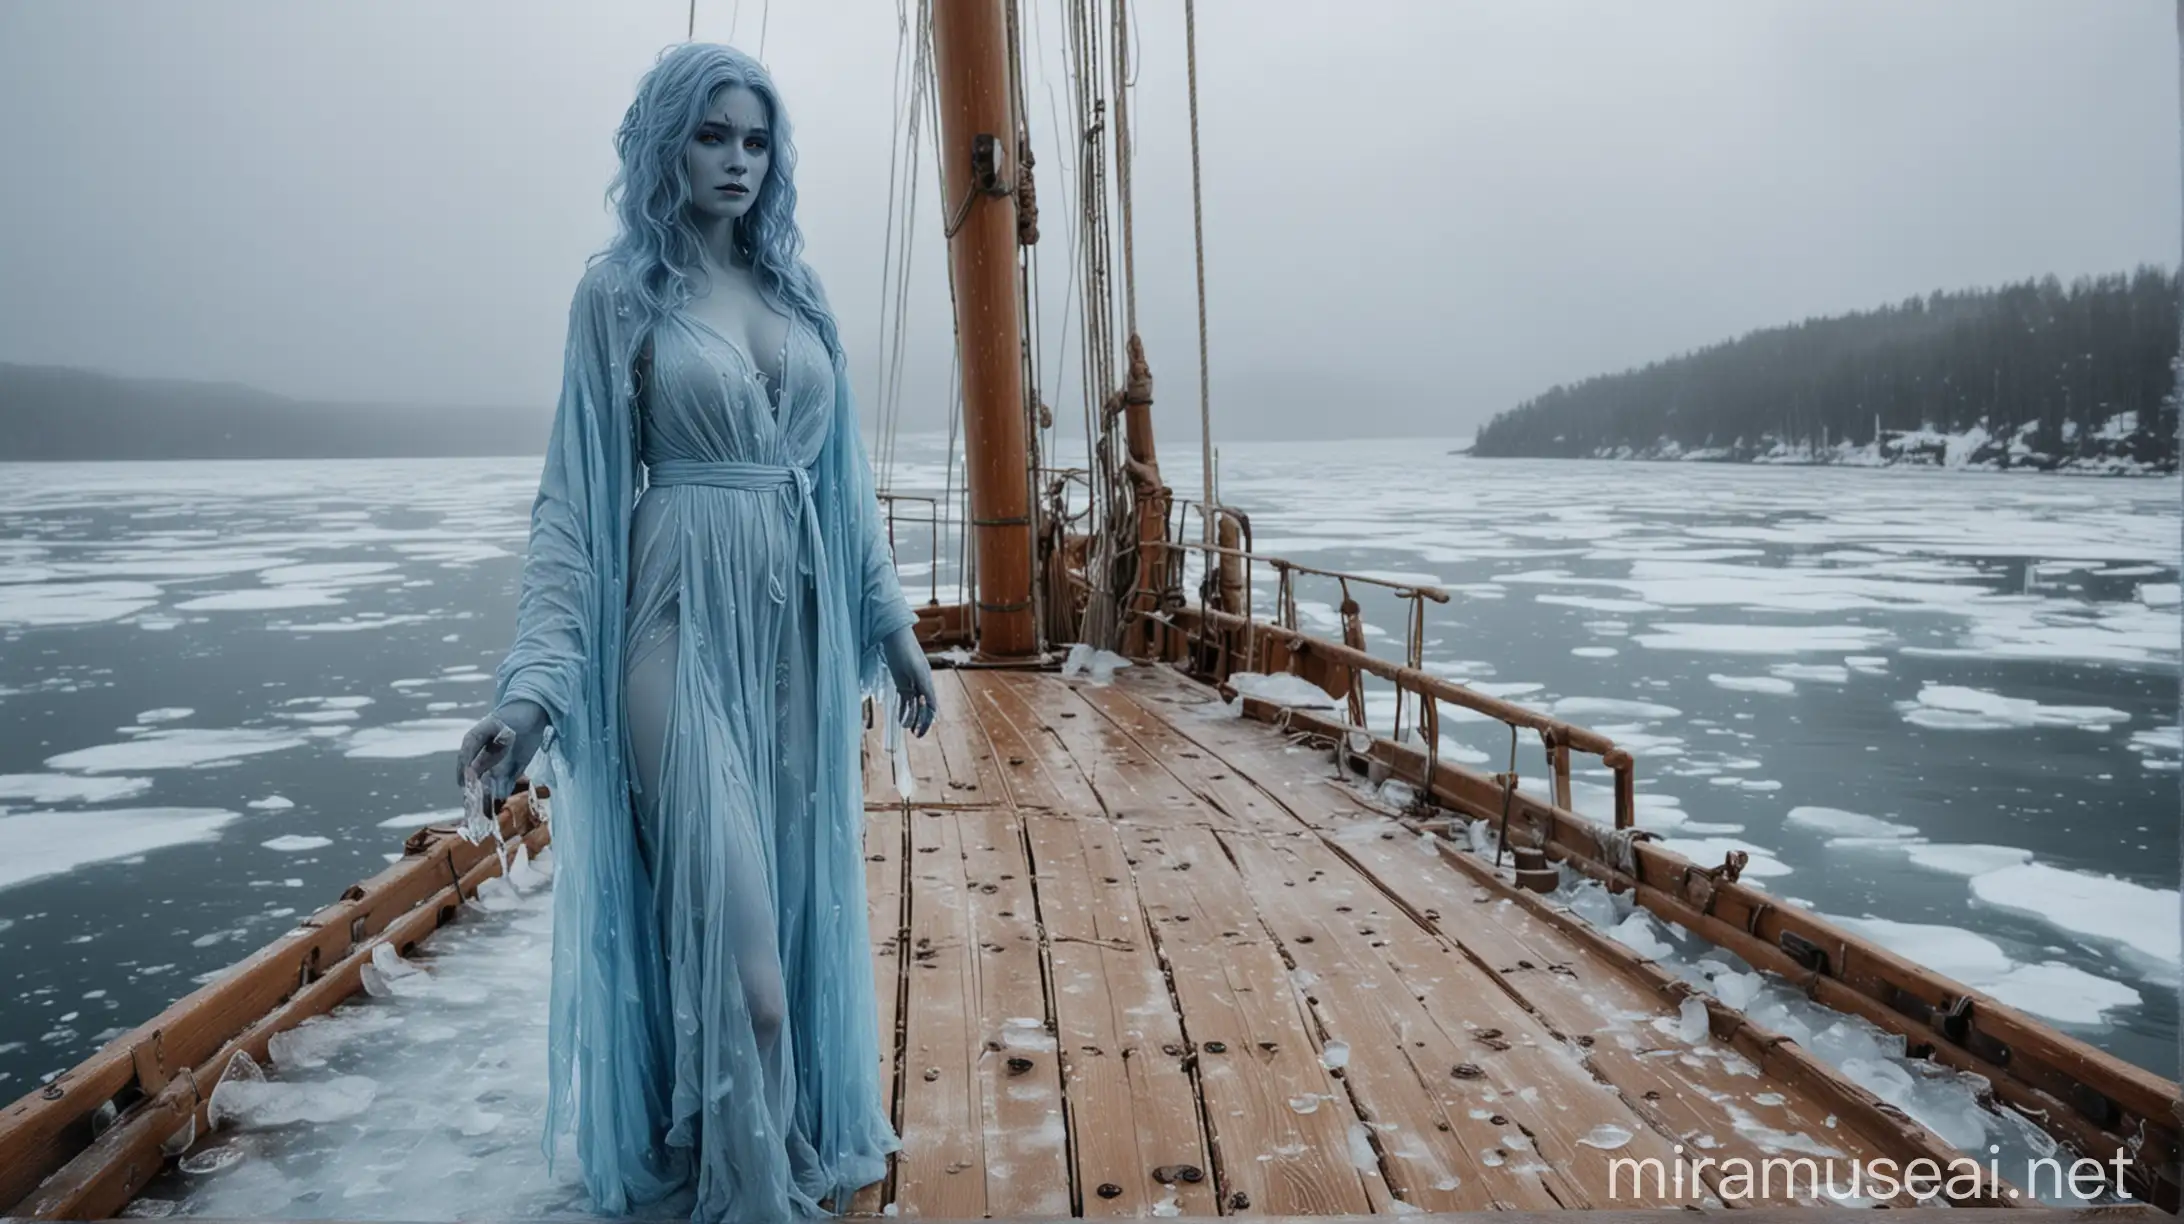 Enchanting BlueSkinned Giantess on Wooden Ship Deck